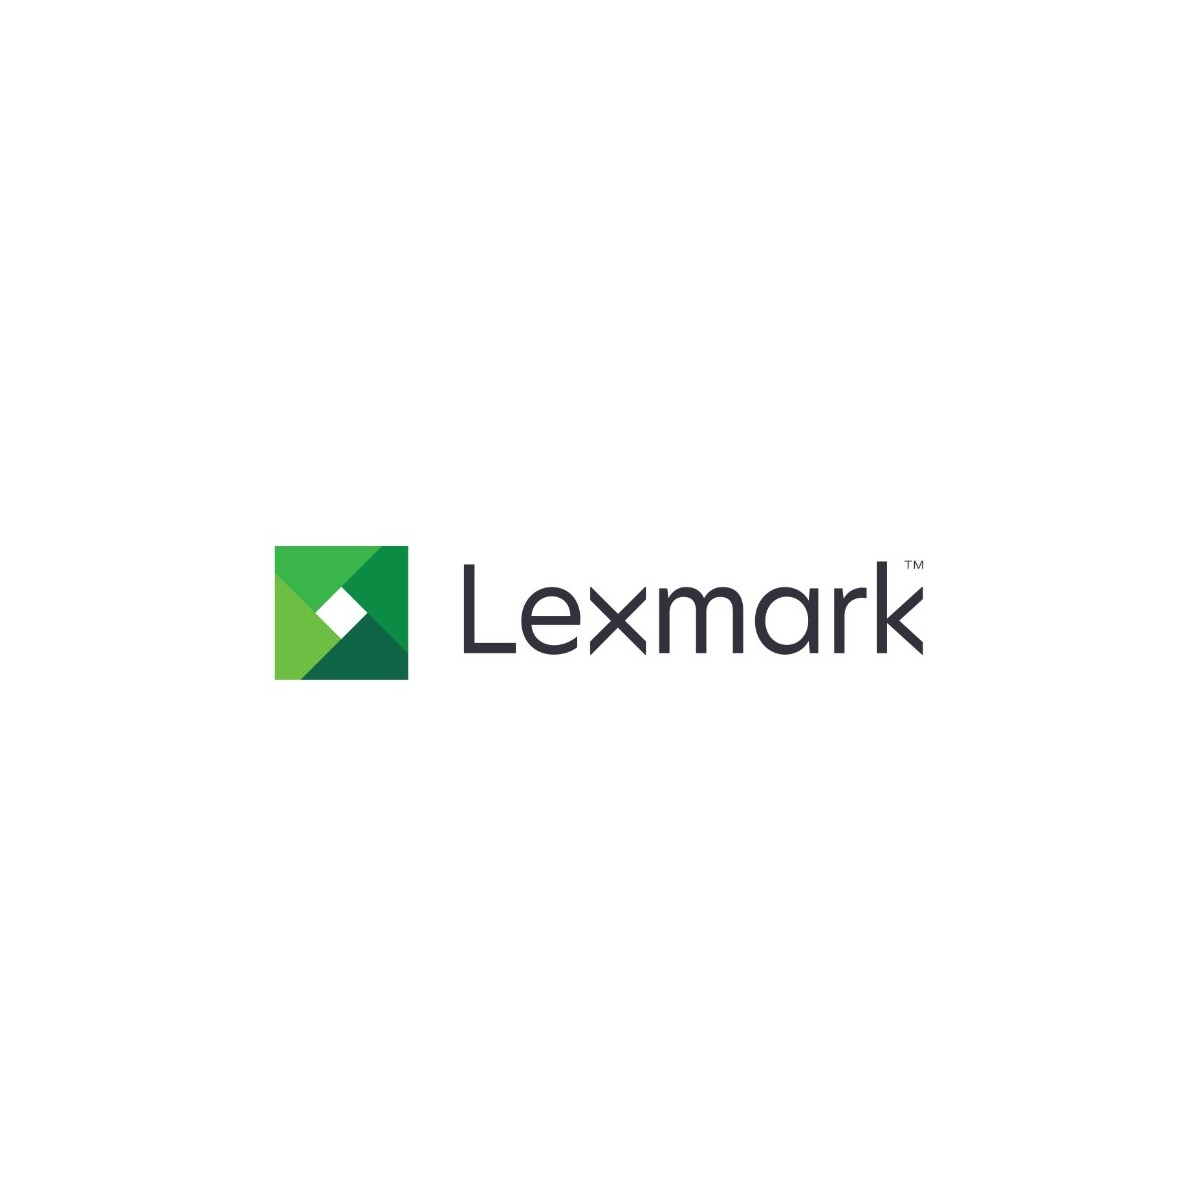 Lexmark LexT52x - Black,White - Lexmark T52x - 5.44 g